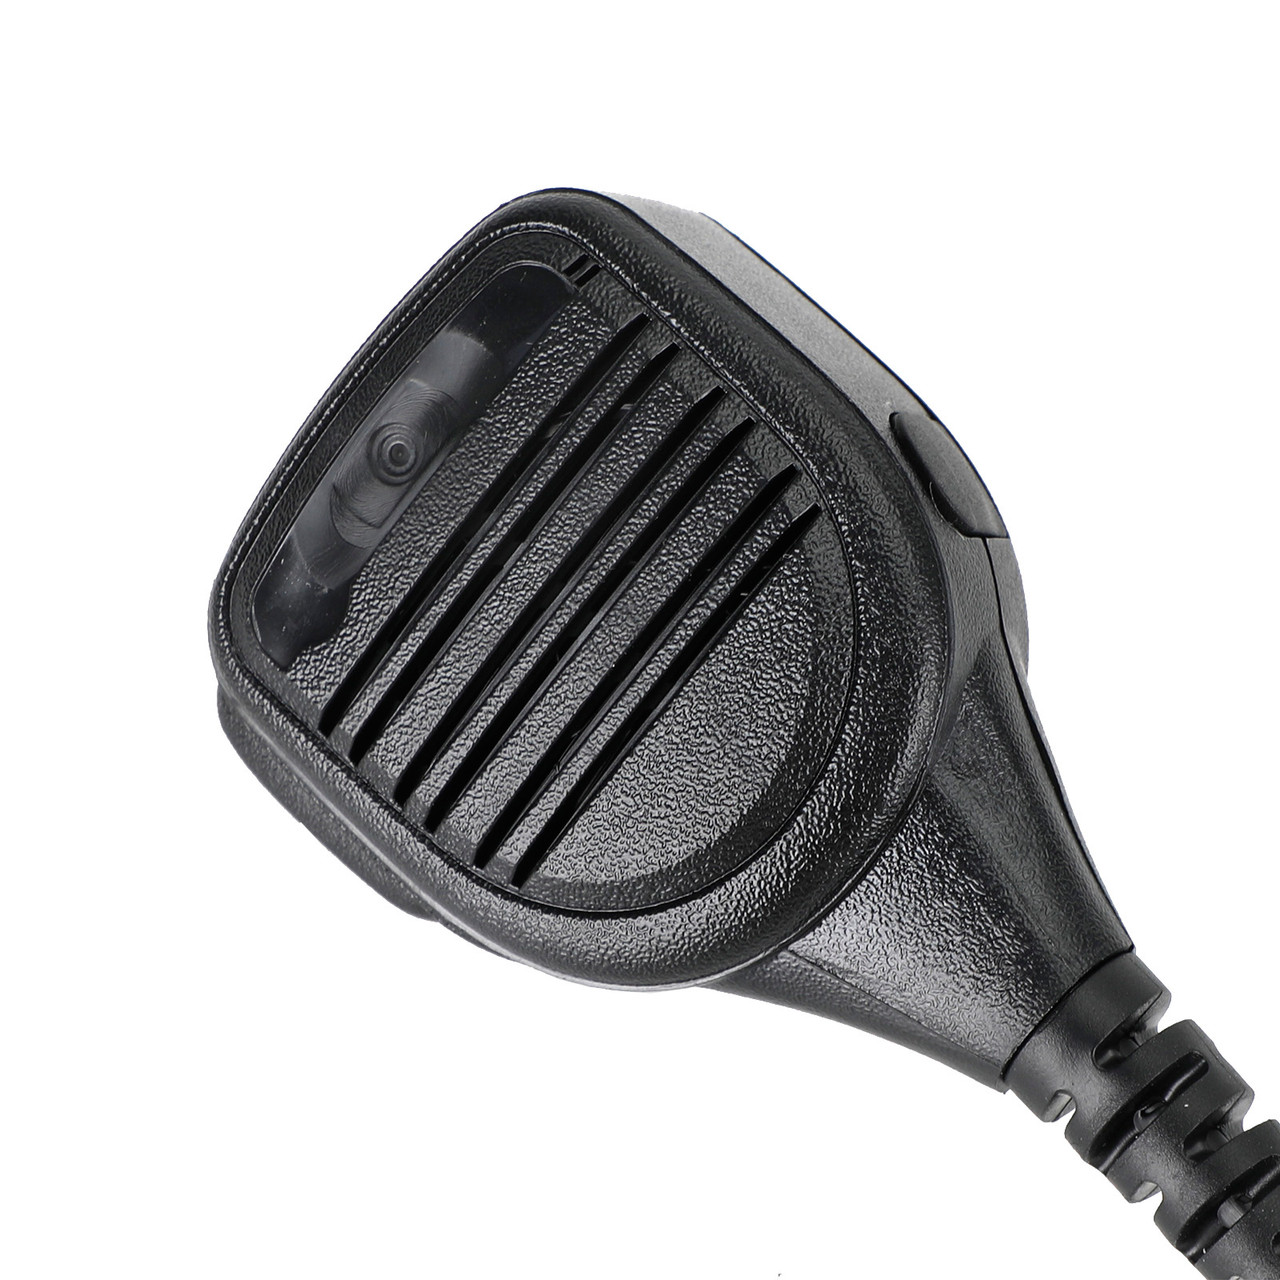 Waterproof Microphone Speaker Fit for ICOM IC-M33 M34 M36 M37 M23 M24 M25 Radio